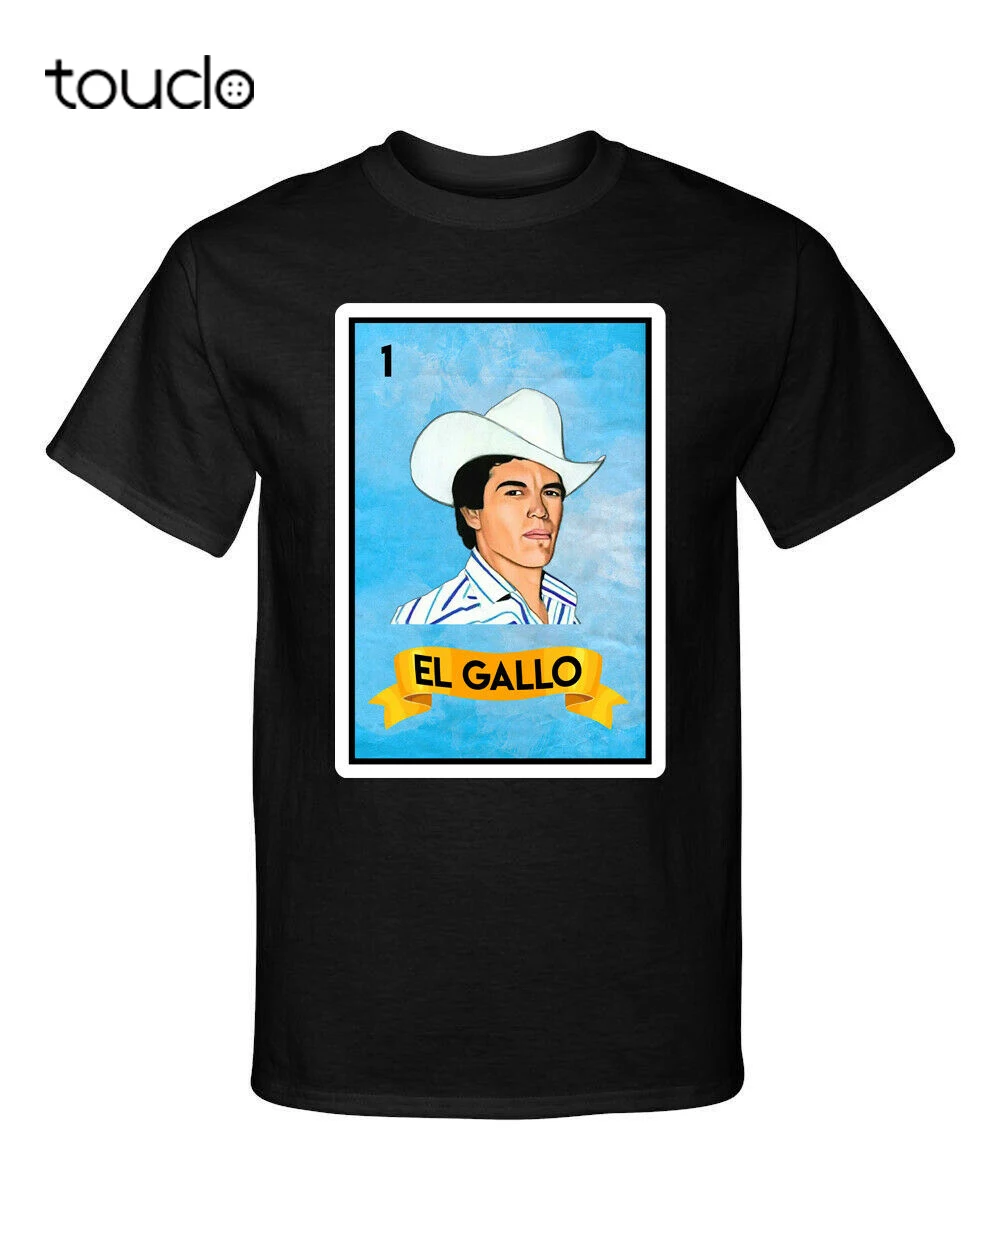 El Gallo Loteria Mexican Shirt Chalino Sanchez Tee Shirt Funny Family Novelty